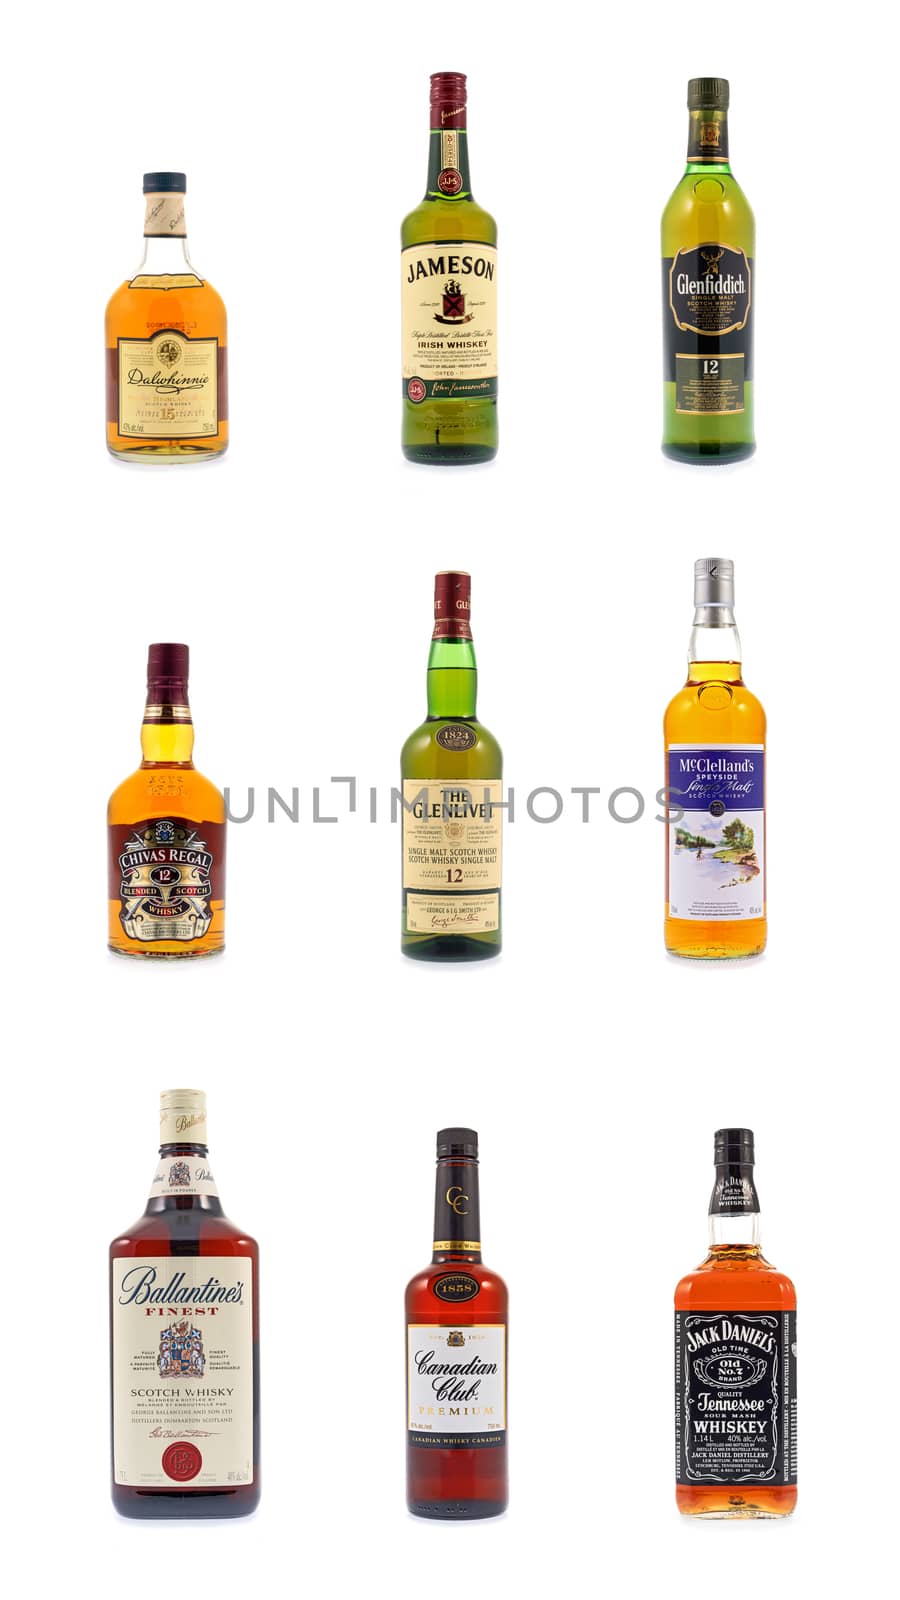 Images of whisky bottles Jack Daniel's, Canadian Club, Ballantine's, The Glenlivet, Chivas Regal, Dalwhinnie, Jameson, Glenfiddich, McClelland's